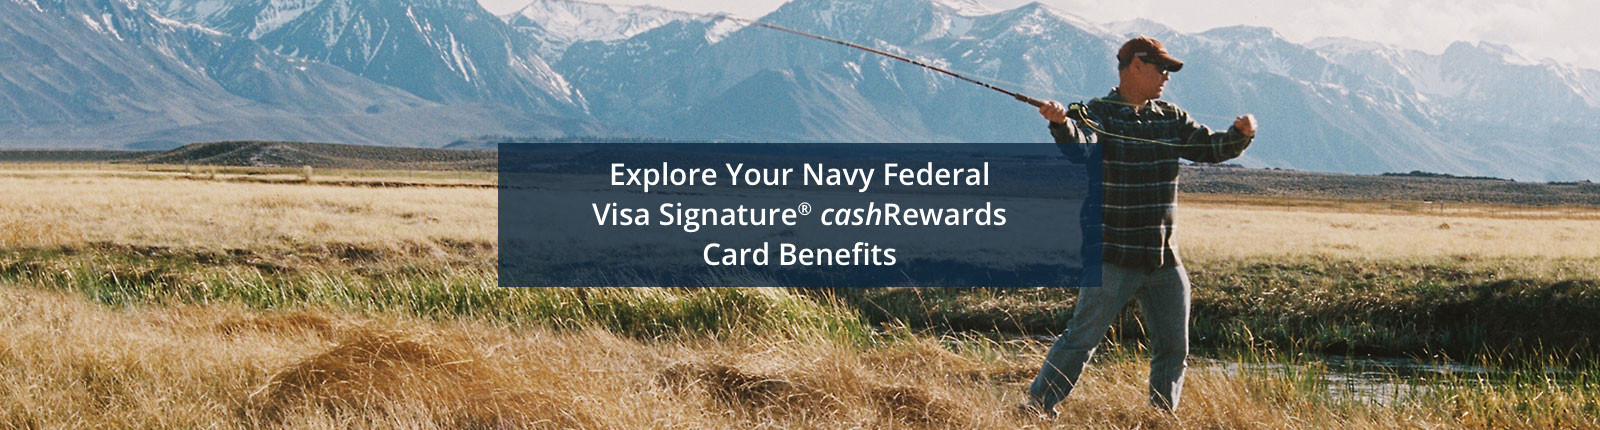 Explore Your Navy Federal Visa Signature® cashRewards Card Benefits